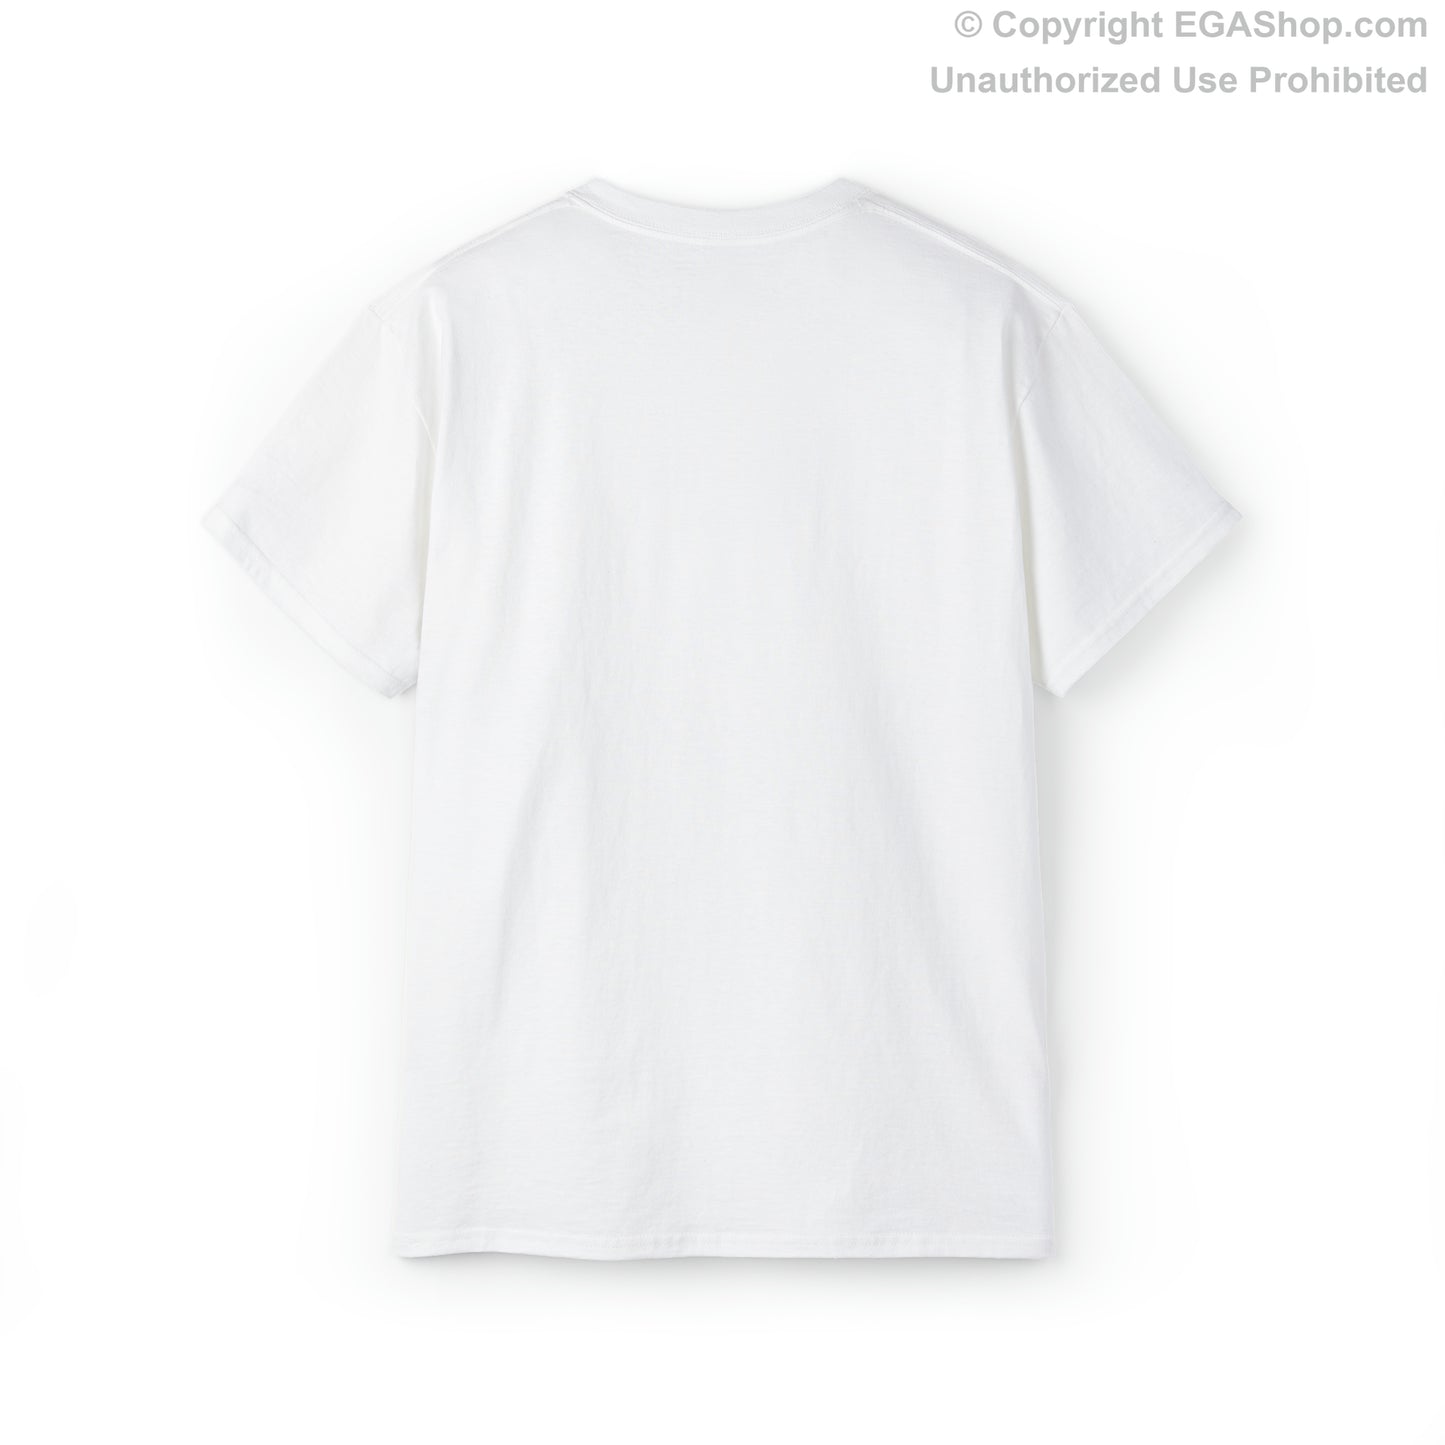 T-Shirt: Charlie Co. MCRD San Diego (EGA, Blank Back)